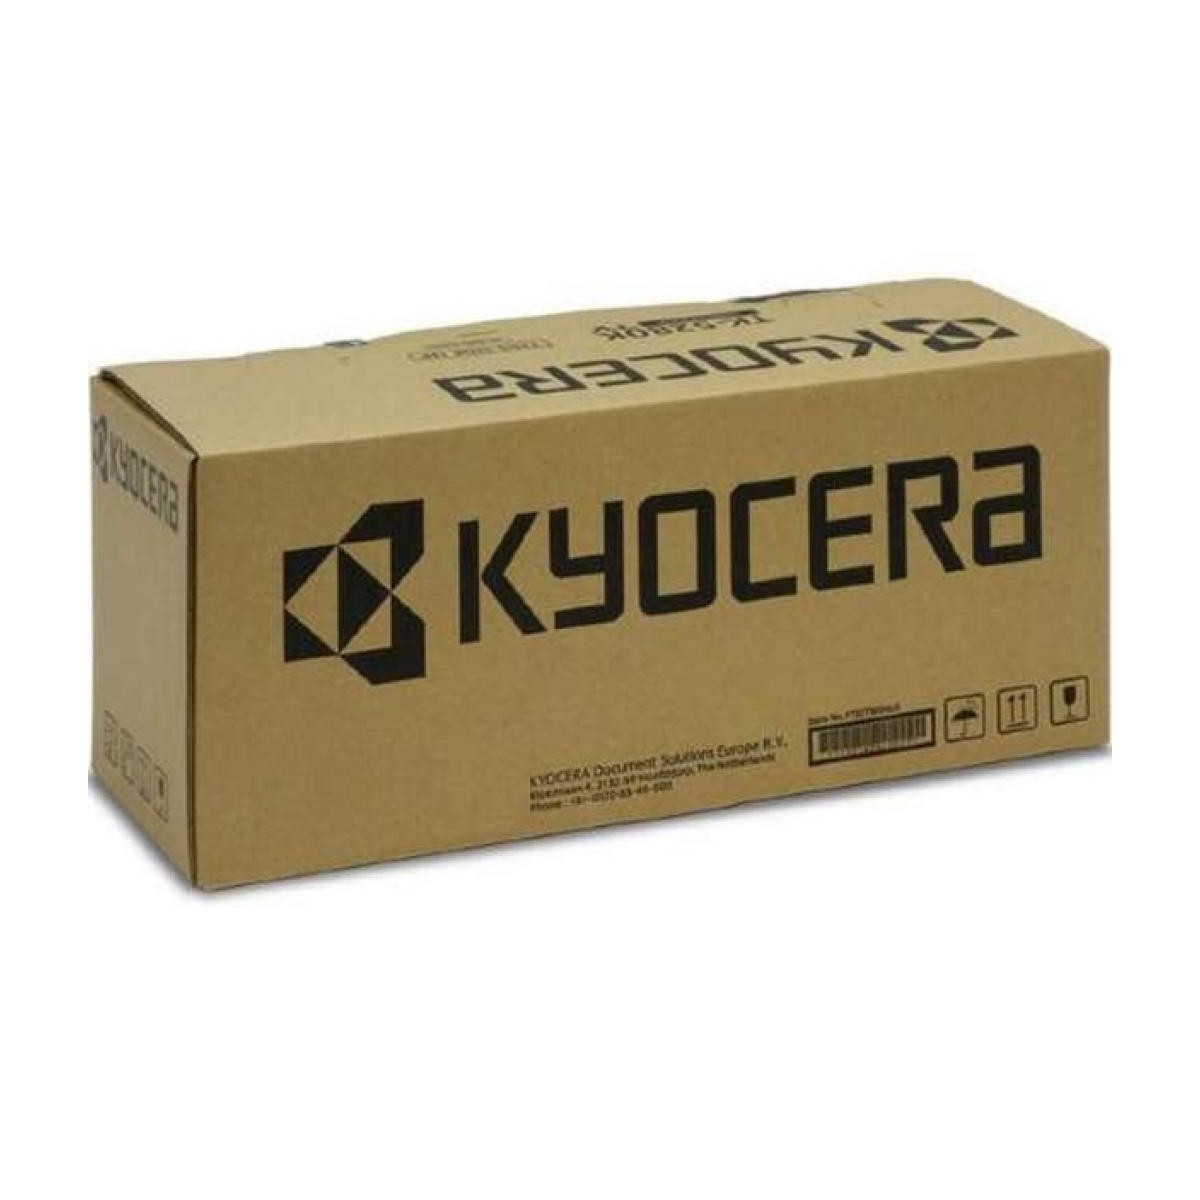 Kyocera DK-28 Drum Unit FS-1200